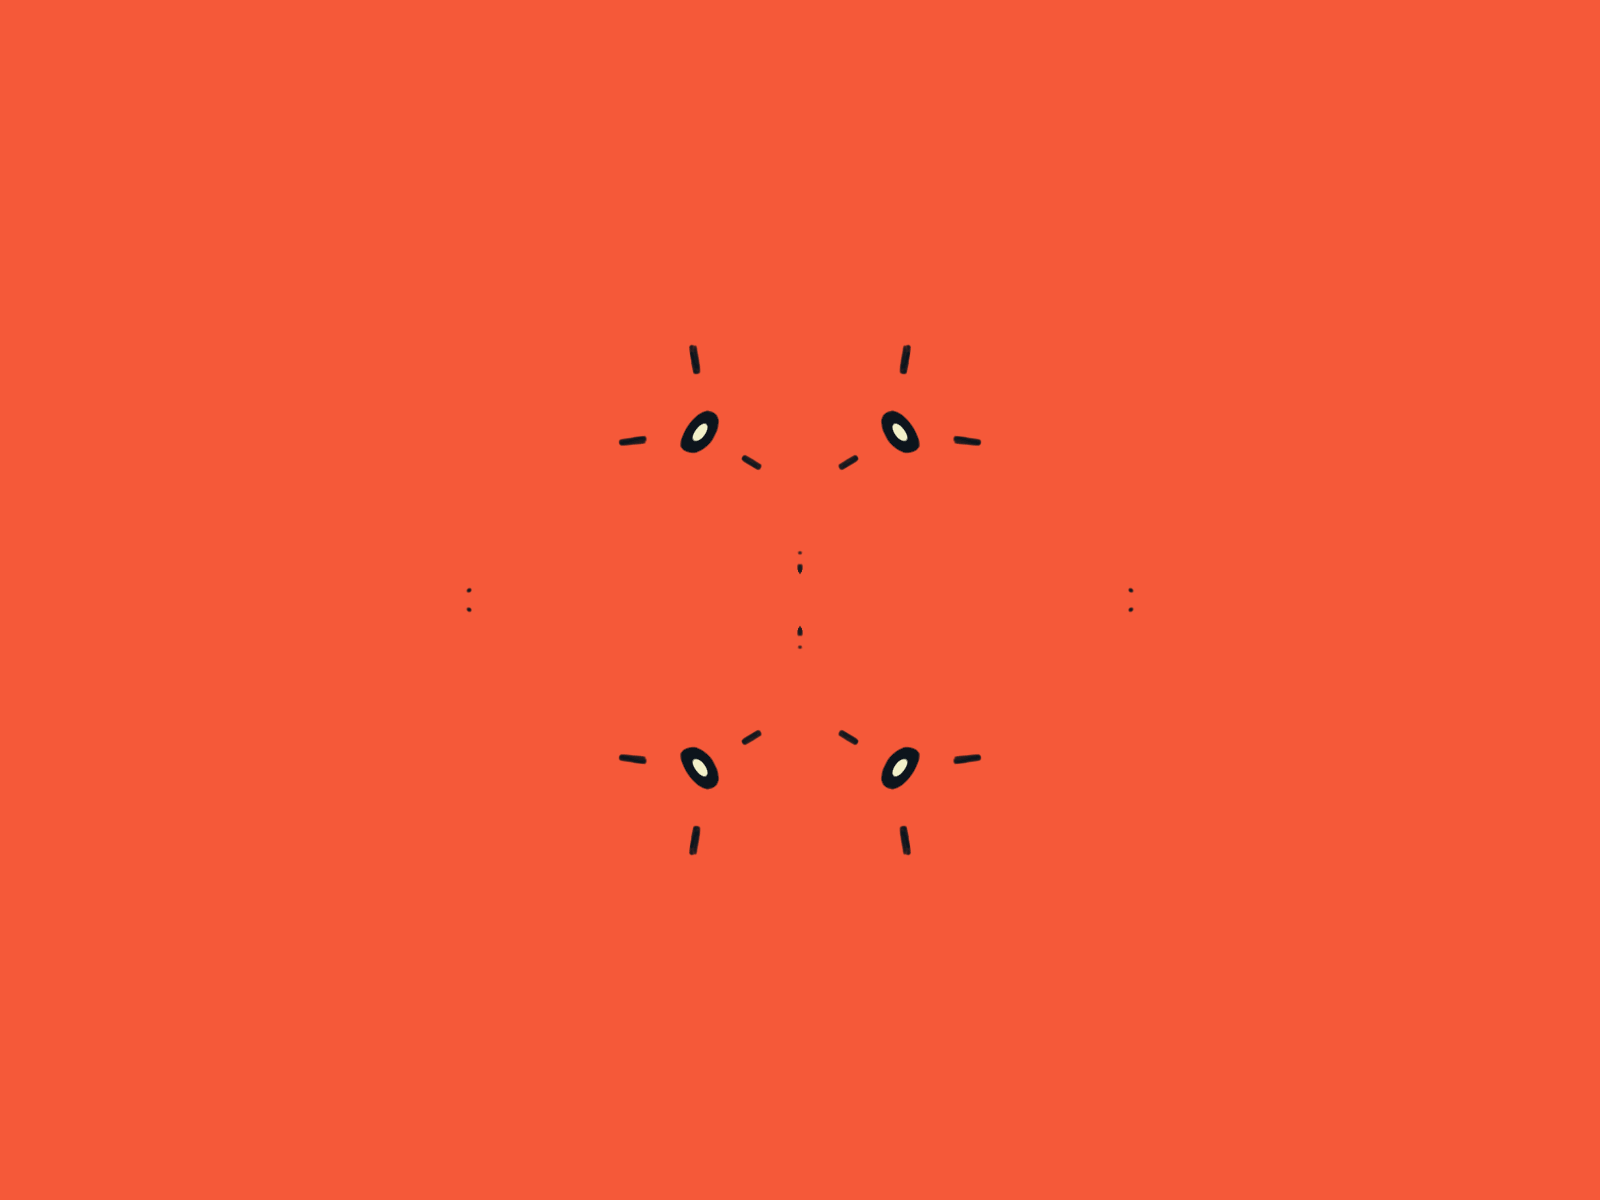 symmetry-by-mikko-anton-on-dribbble